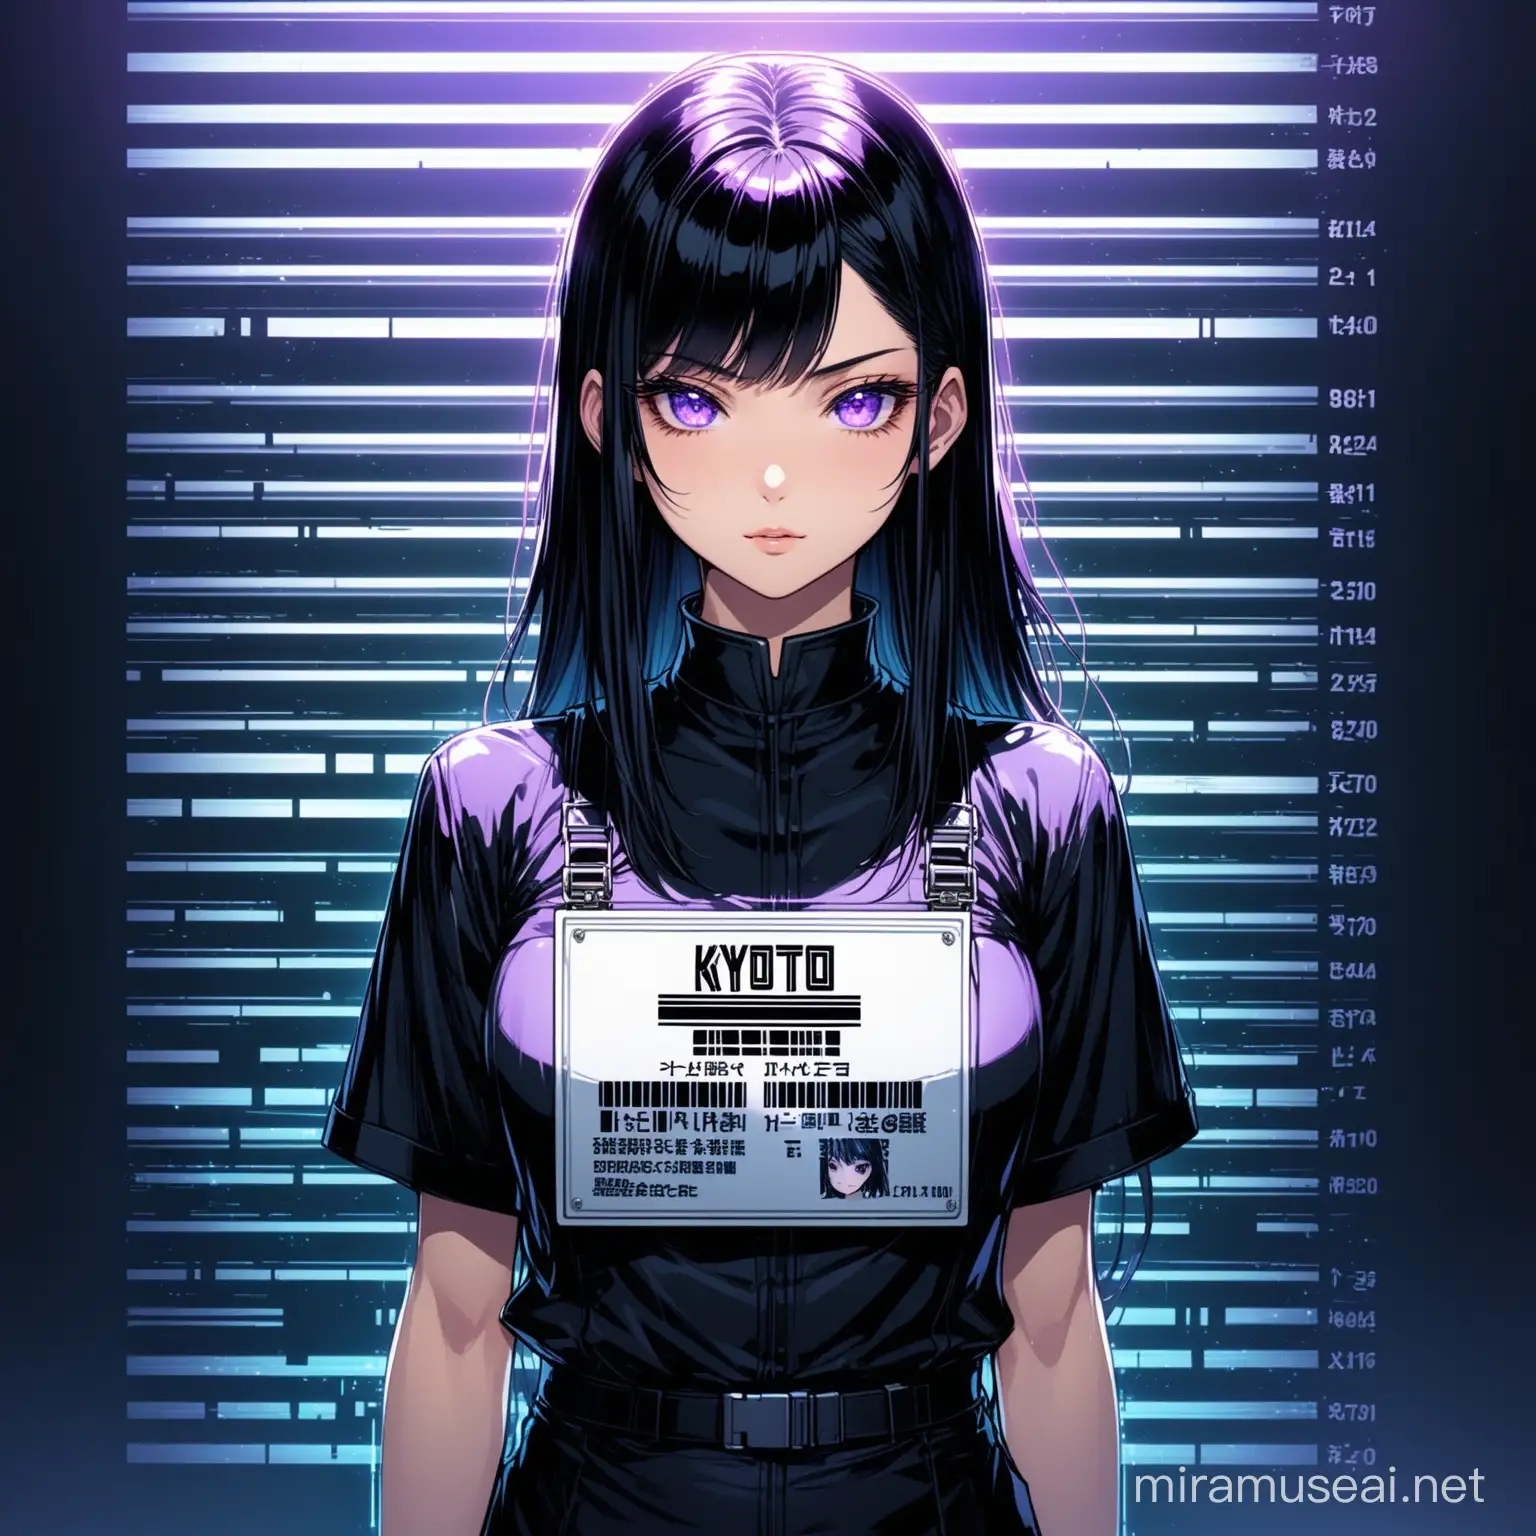 Futuristic Cyberpunk Anime Mugshot Young Woman in School Girl Outfit